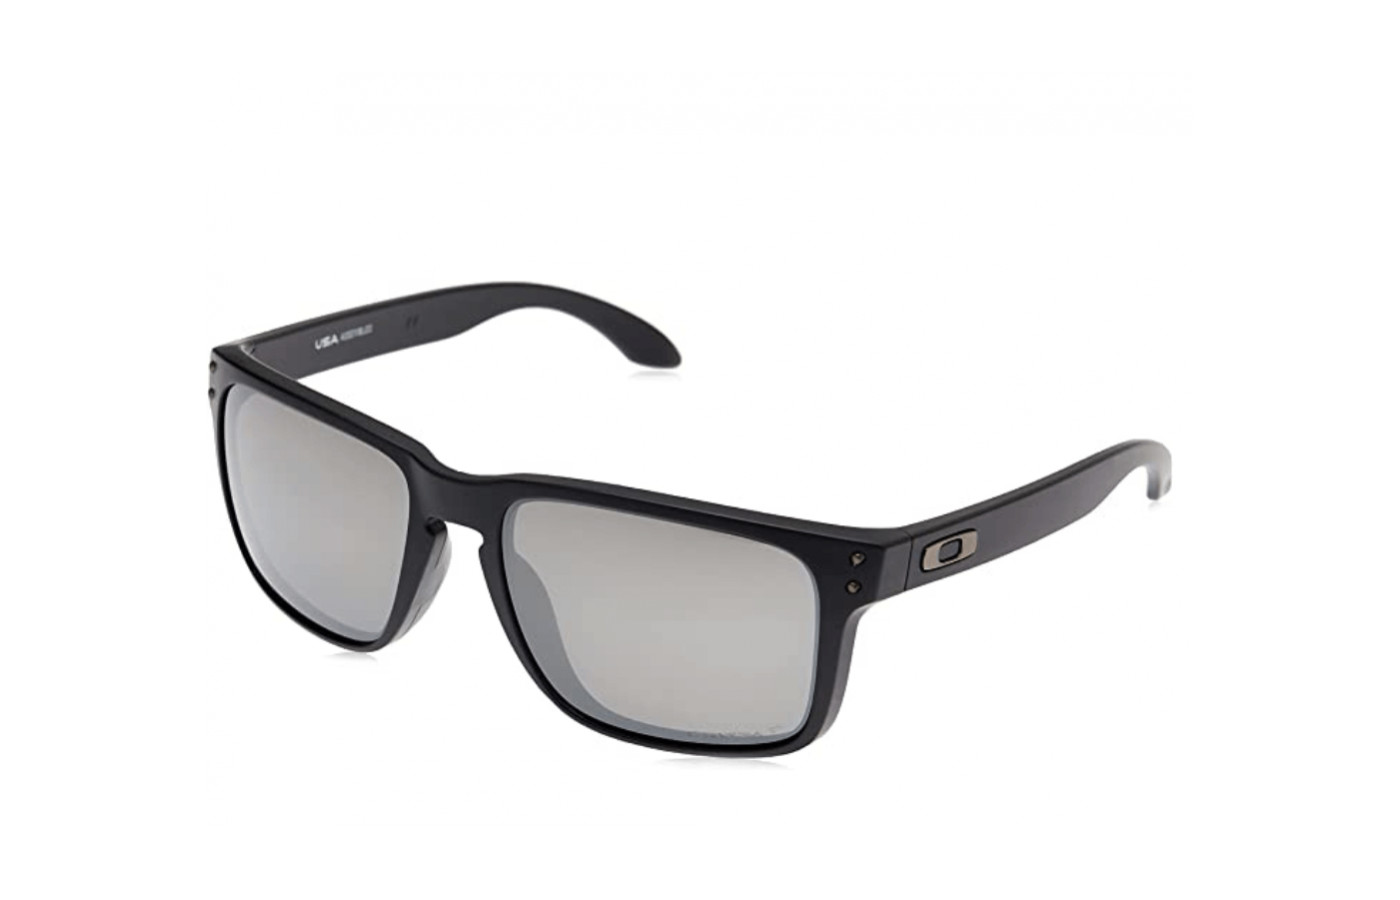 Oakley Holbrook XL Polarized Sunglasses